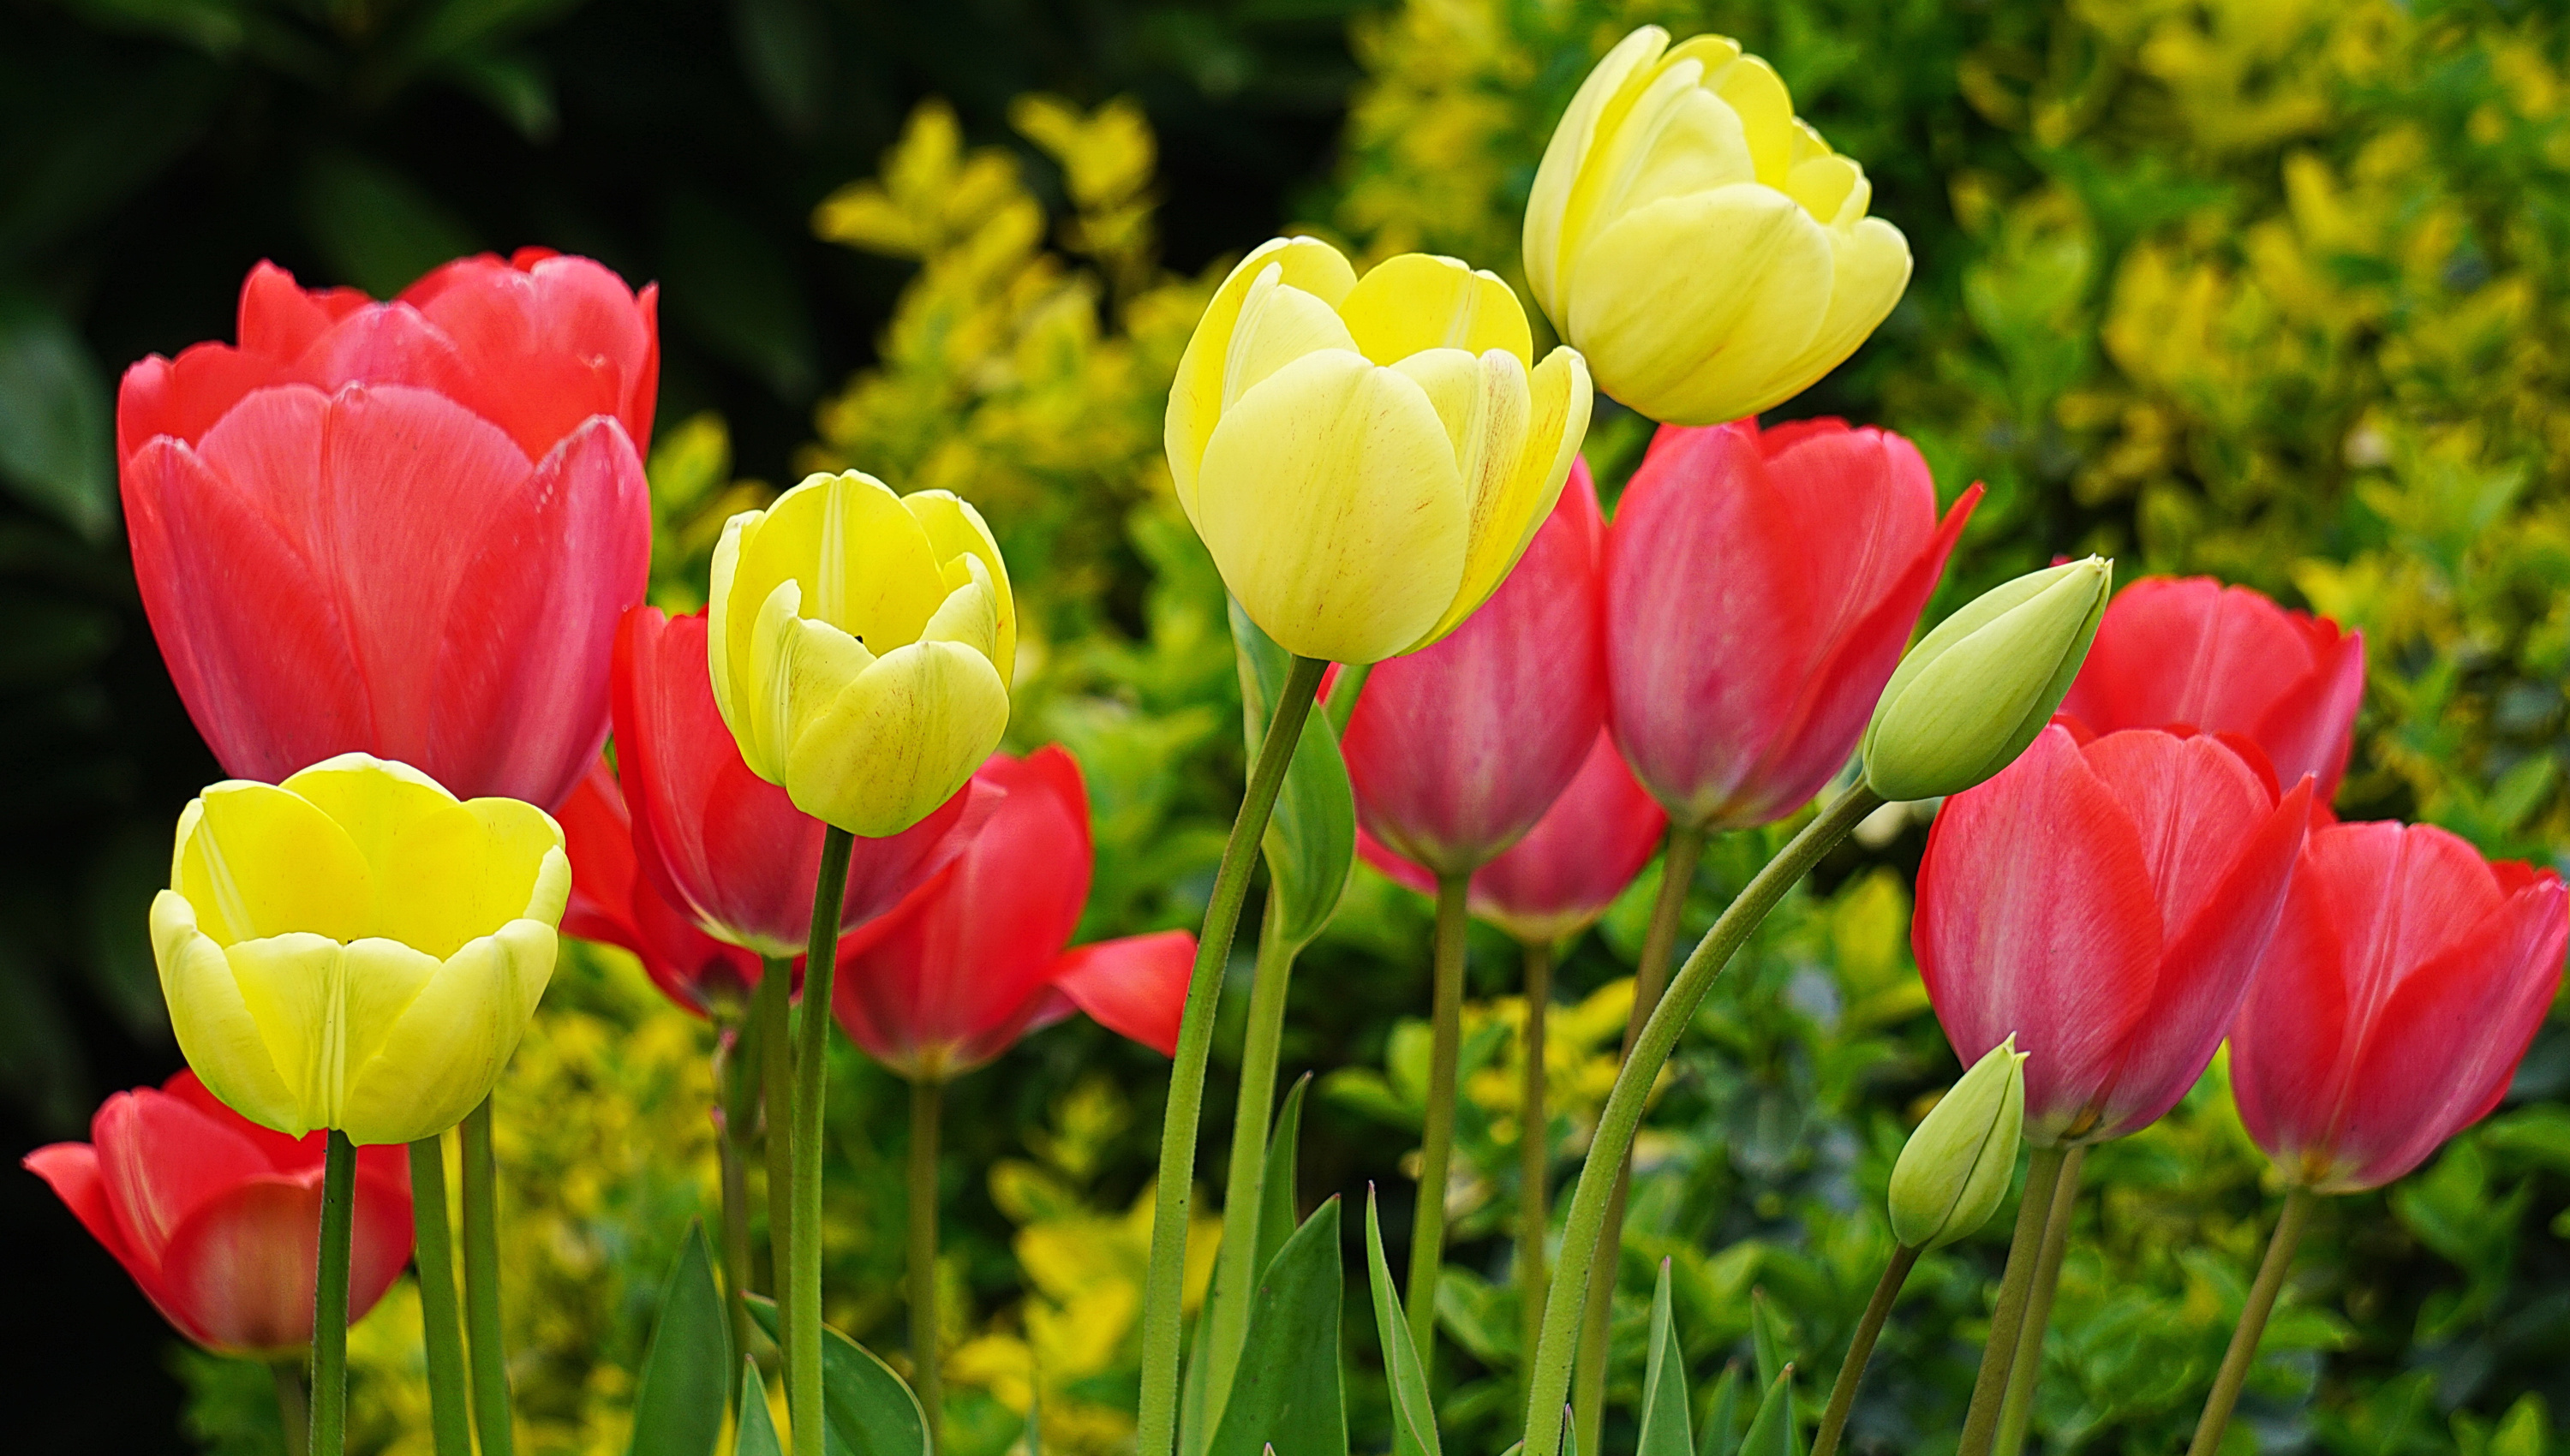 Фото цветок тюльпан макросъемка - бесплатные картинки на Fonwall